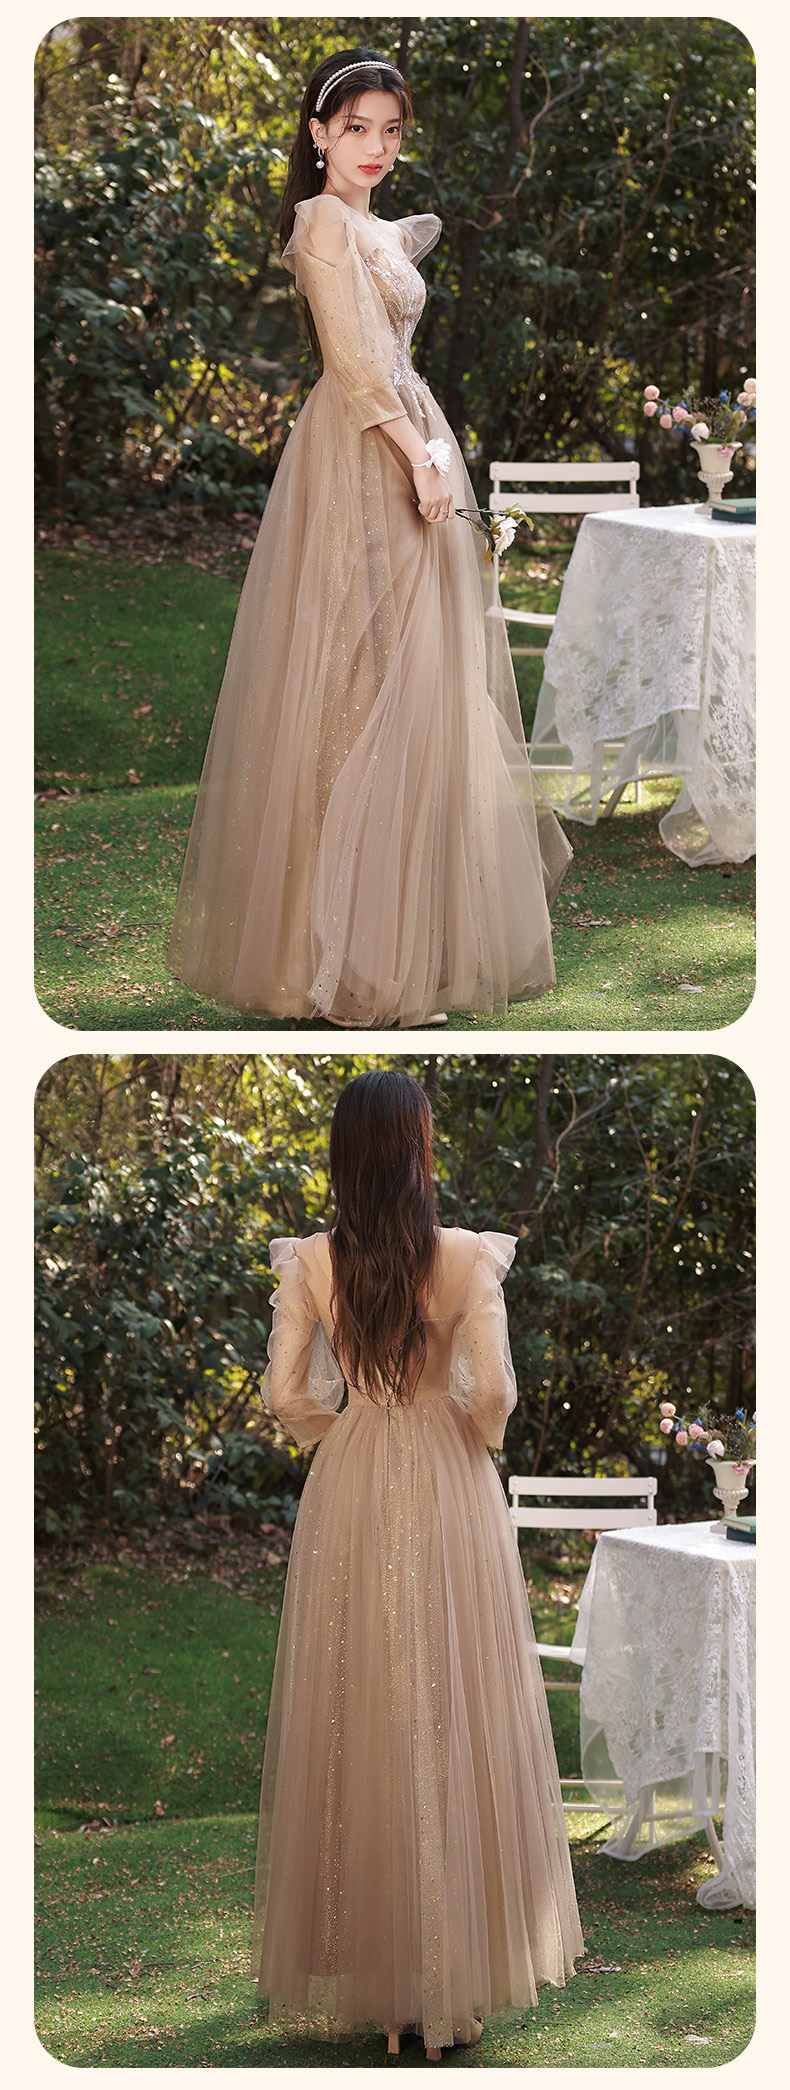 Chiffon-Floor-Length-Bridesmaids-Wedding-Prom-Dress-Ball-Gown18.jpg